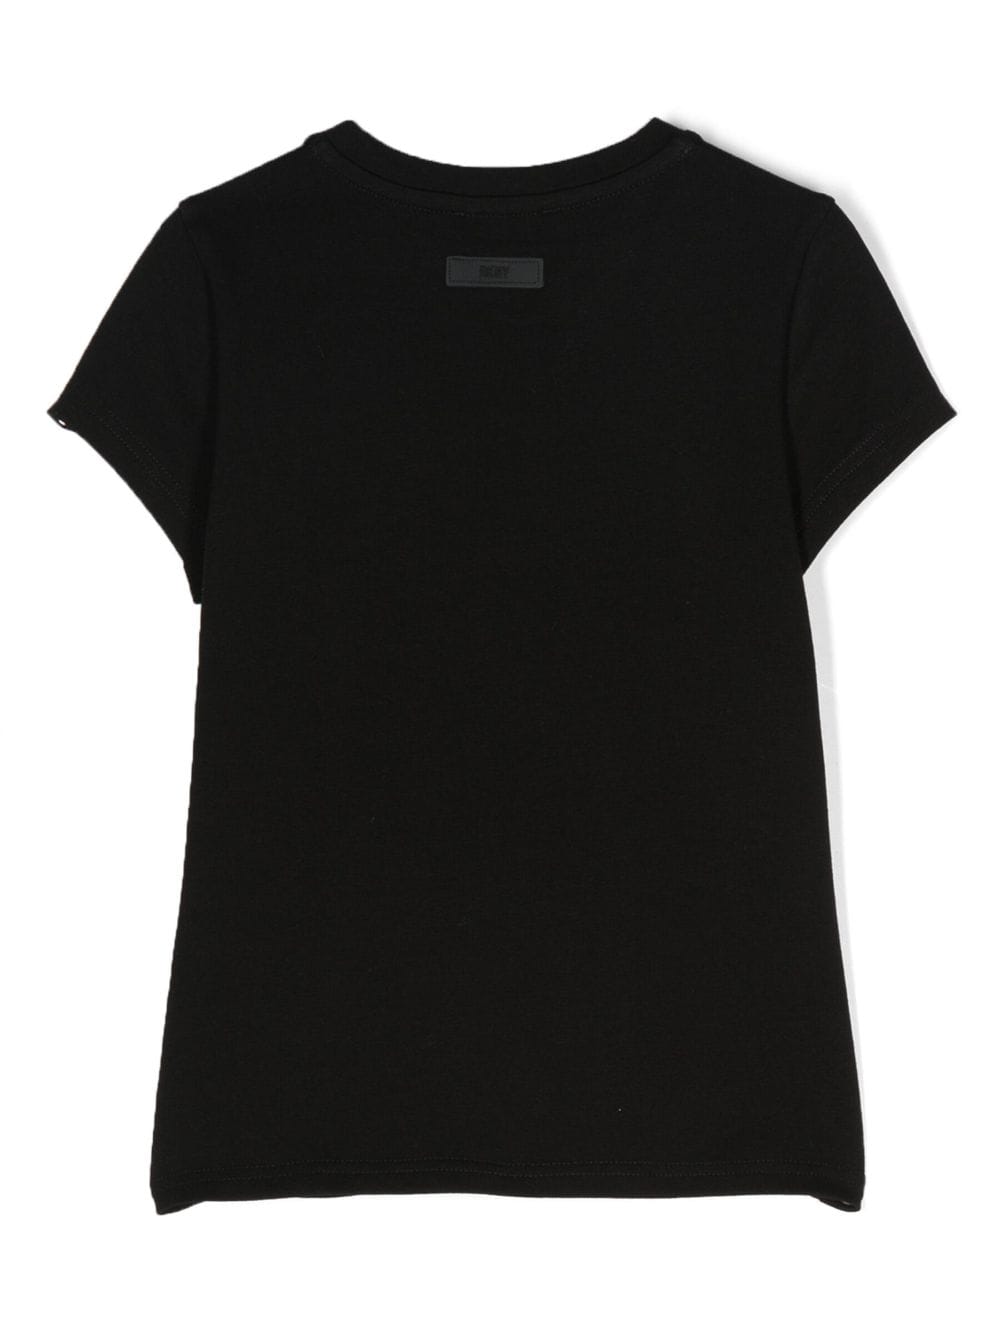 Black cotton jersey boy DKNY t-shirt